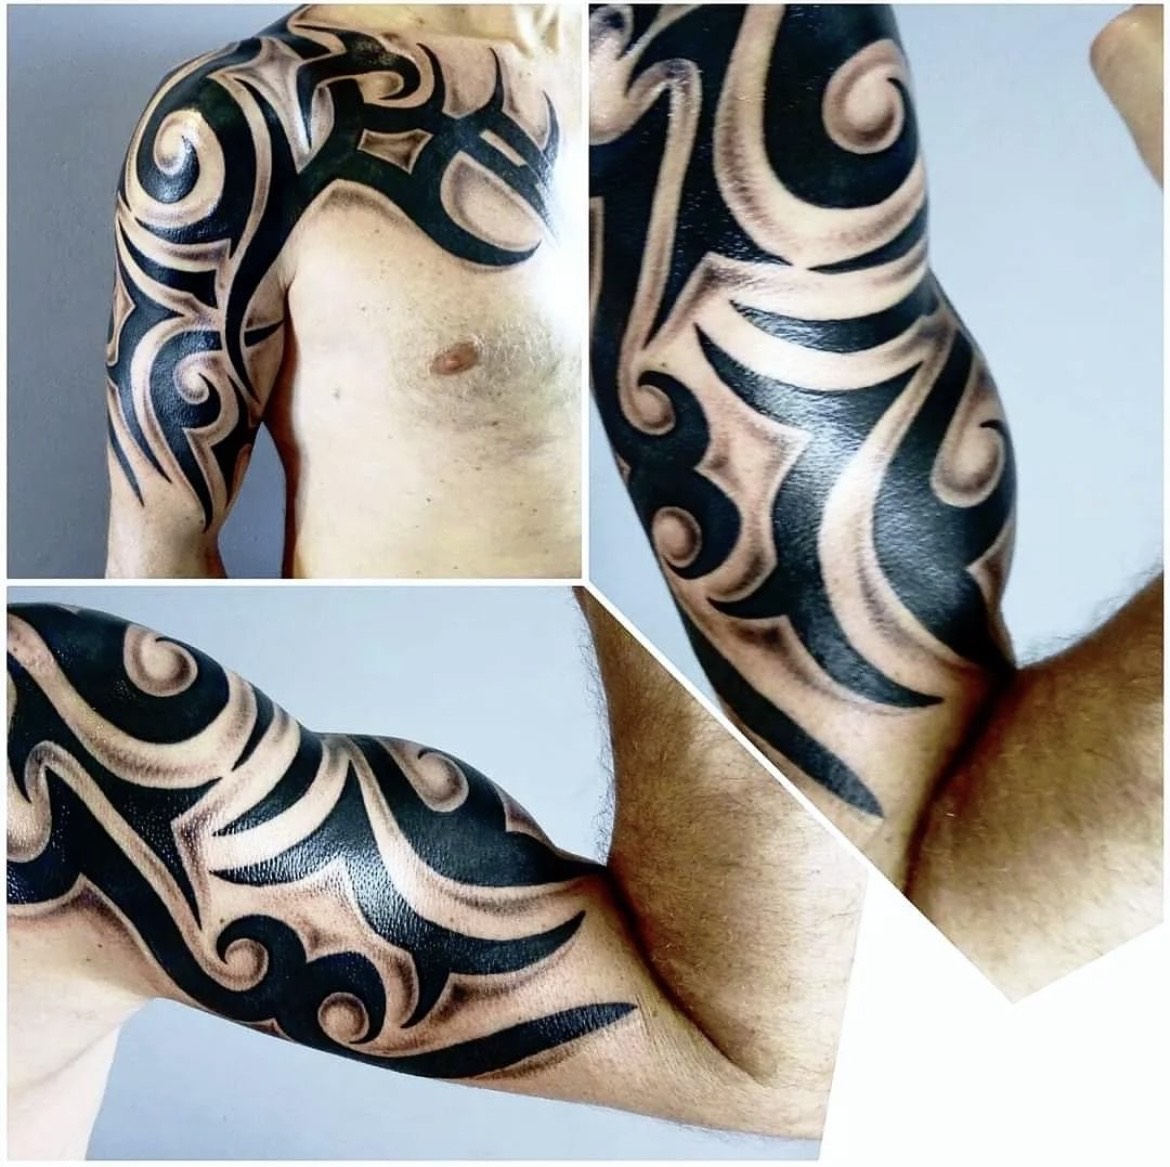 Planet Tattoos - Gas Mask Half Sleeve Tattoo Ideas #1 - https